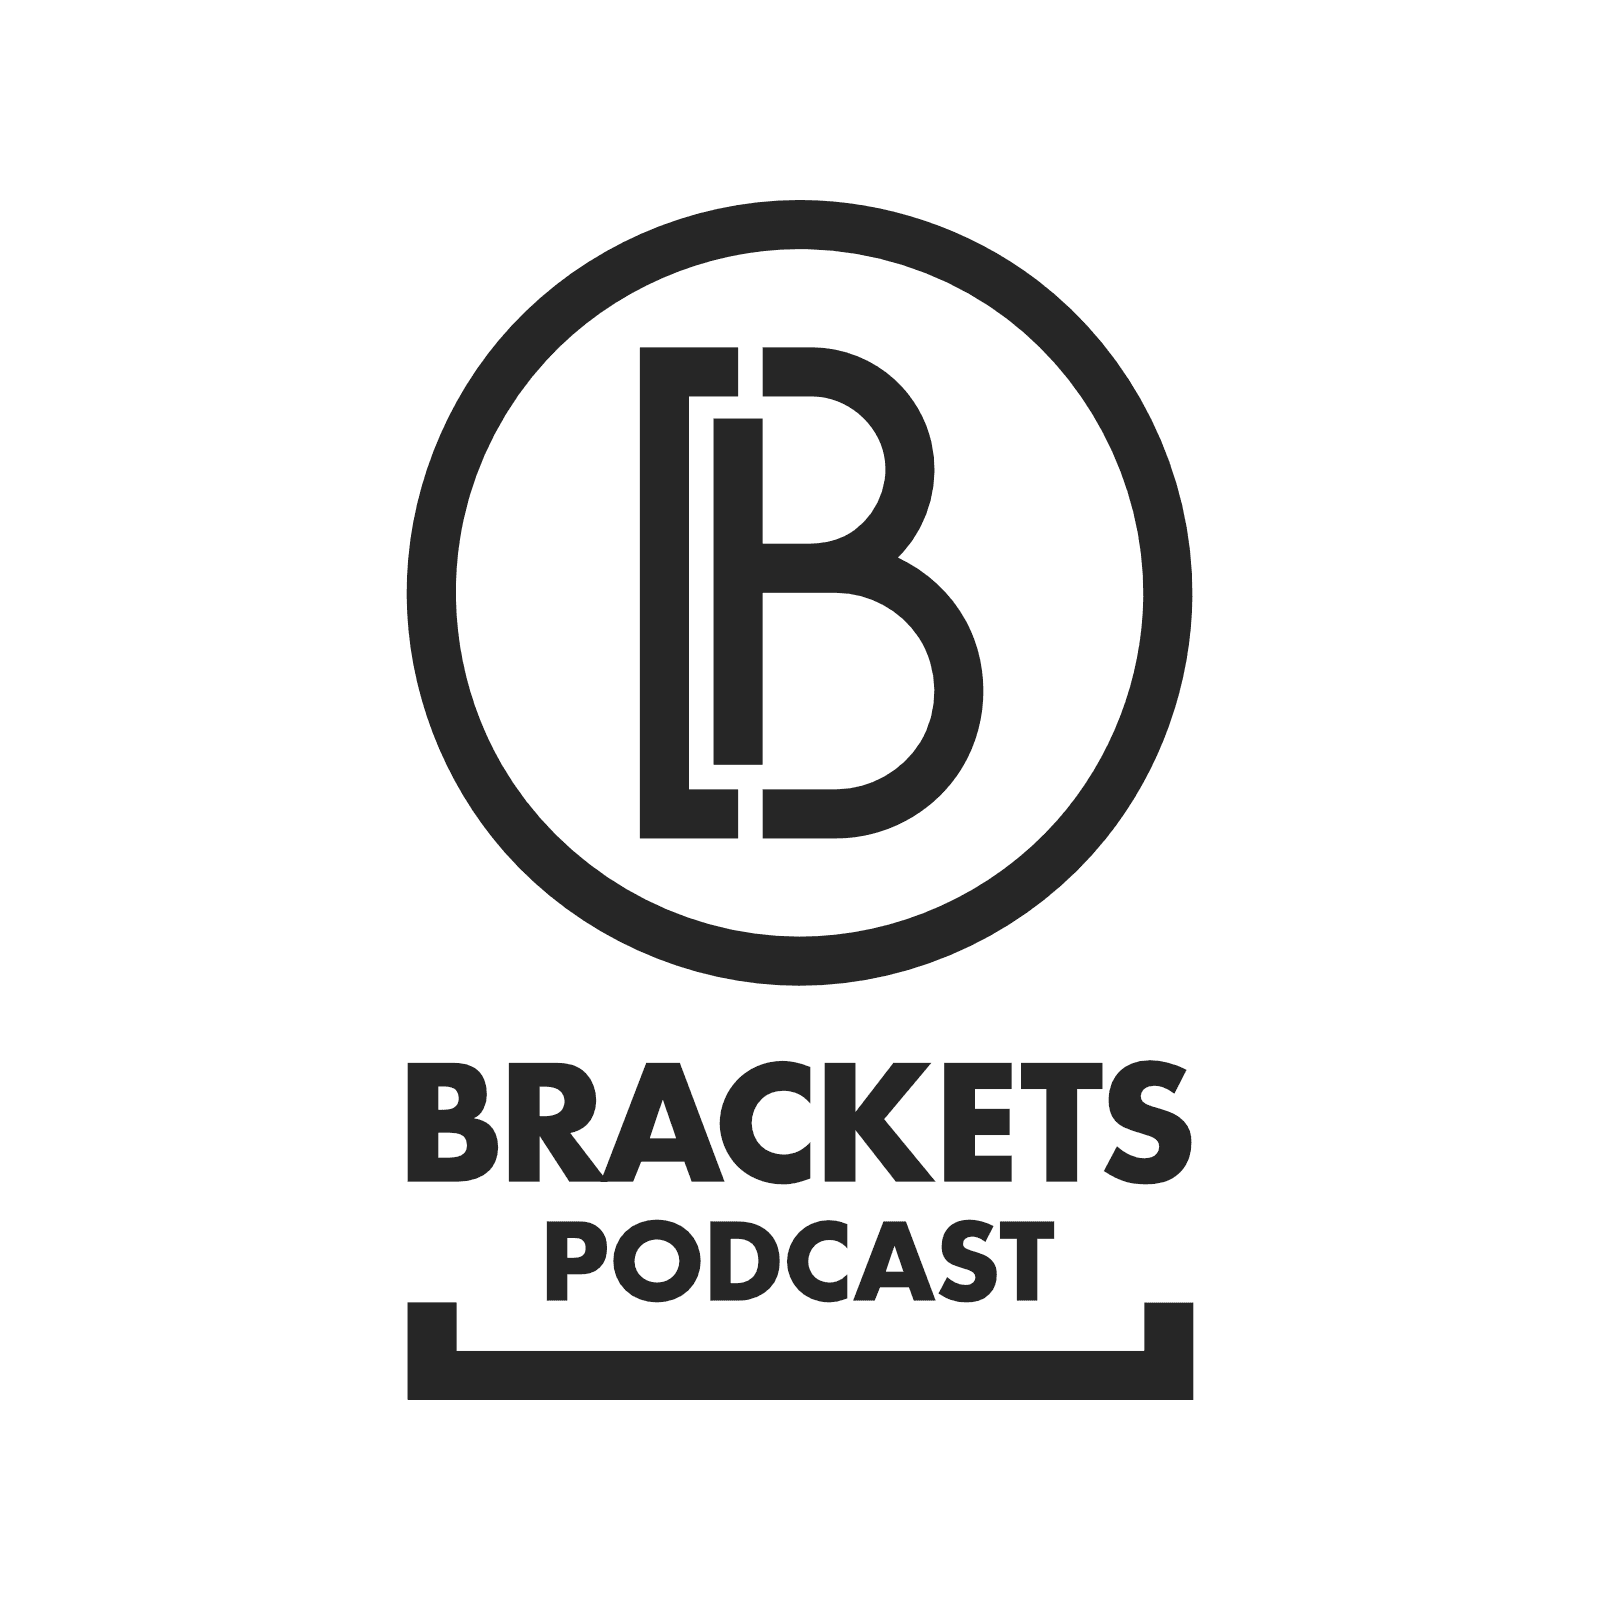 The original logo mark and type logo for ADP's Developer Community Brackets Podcast